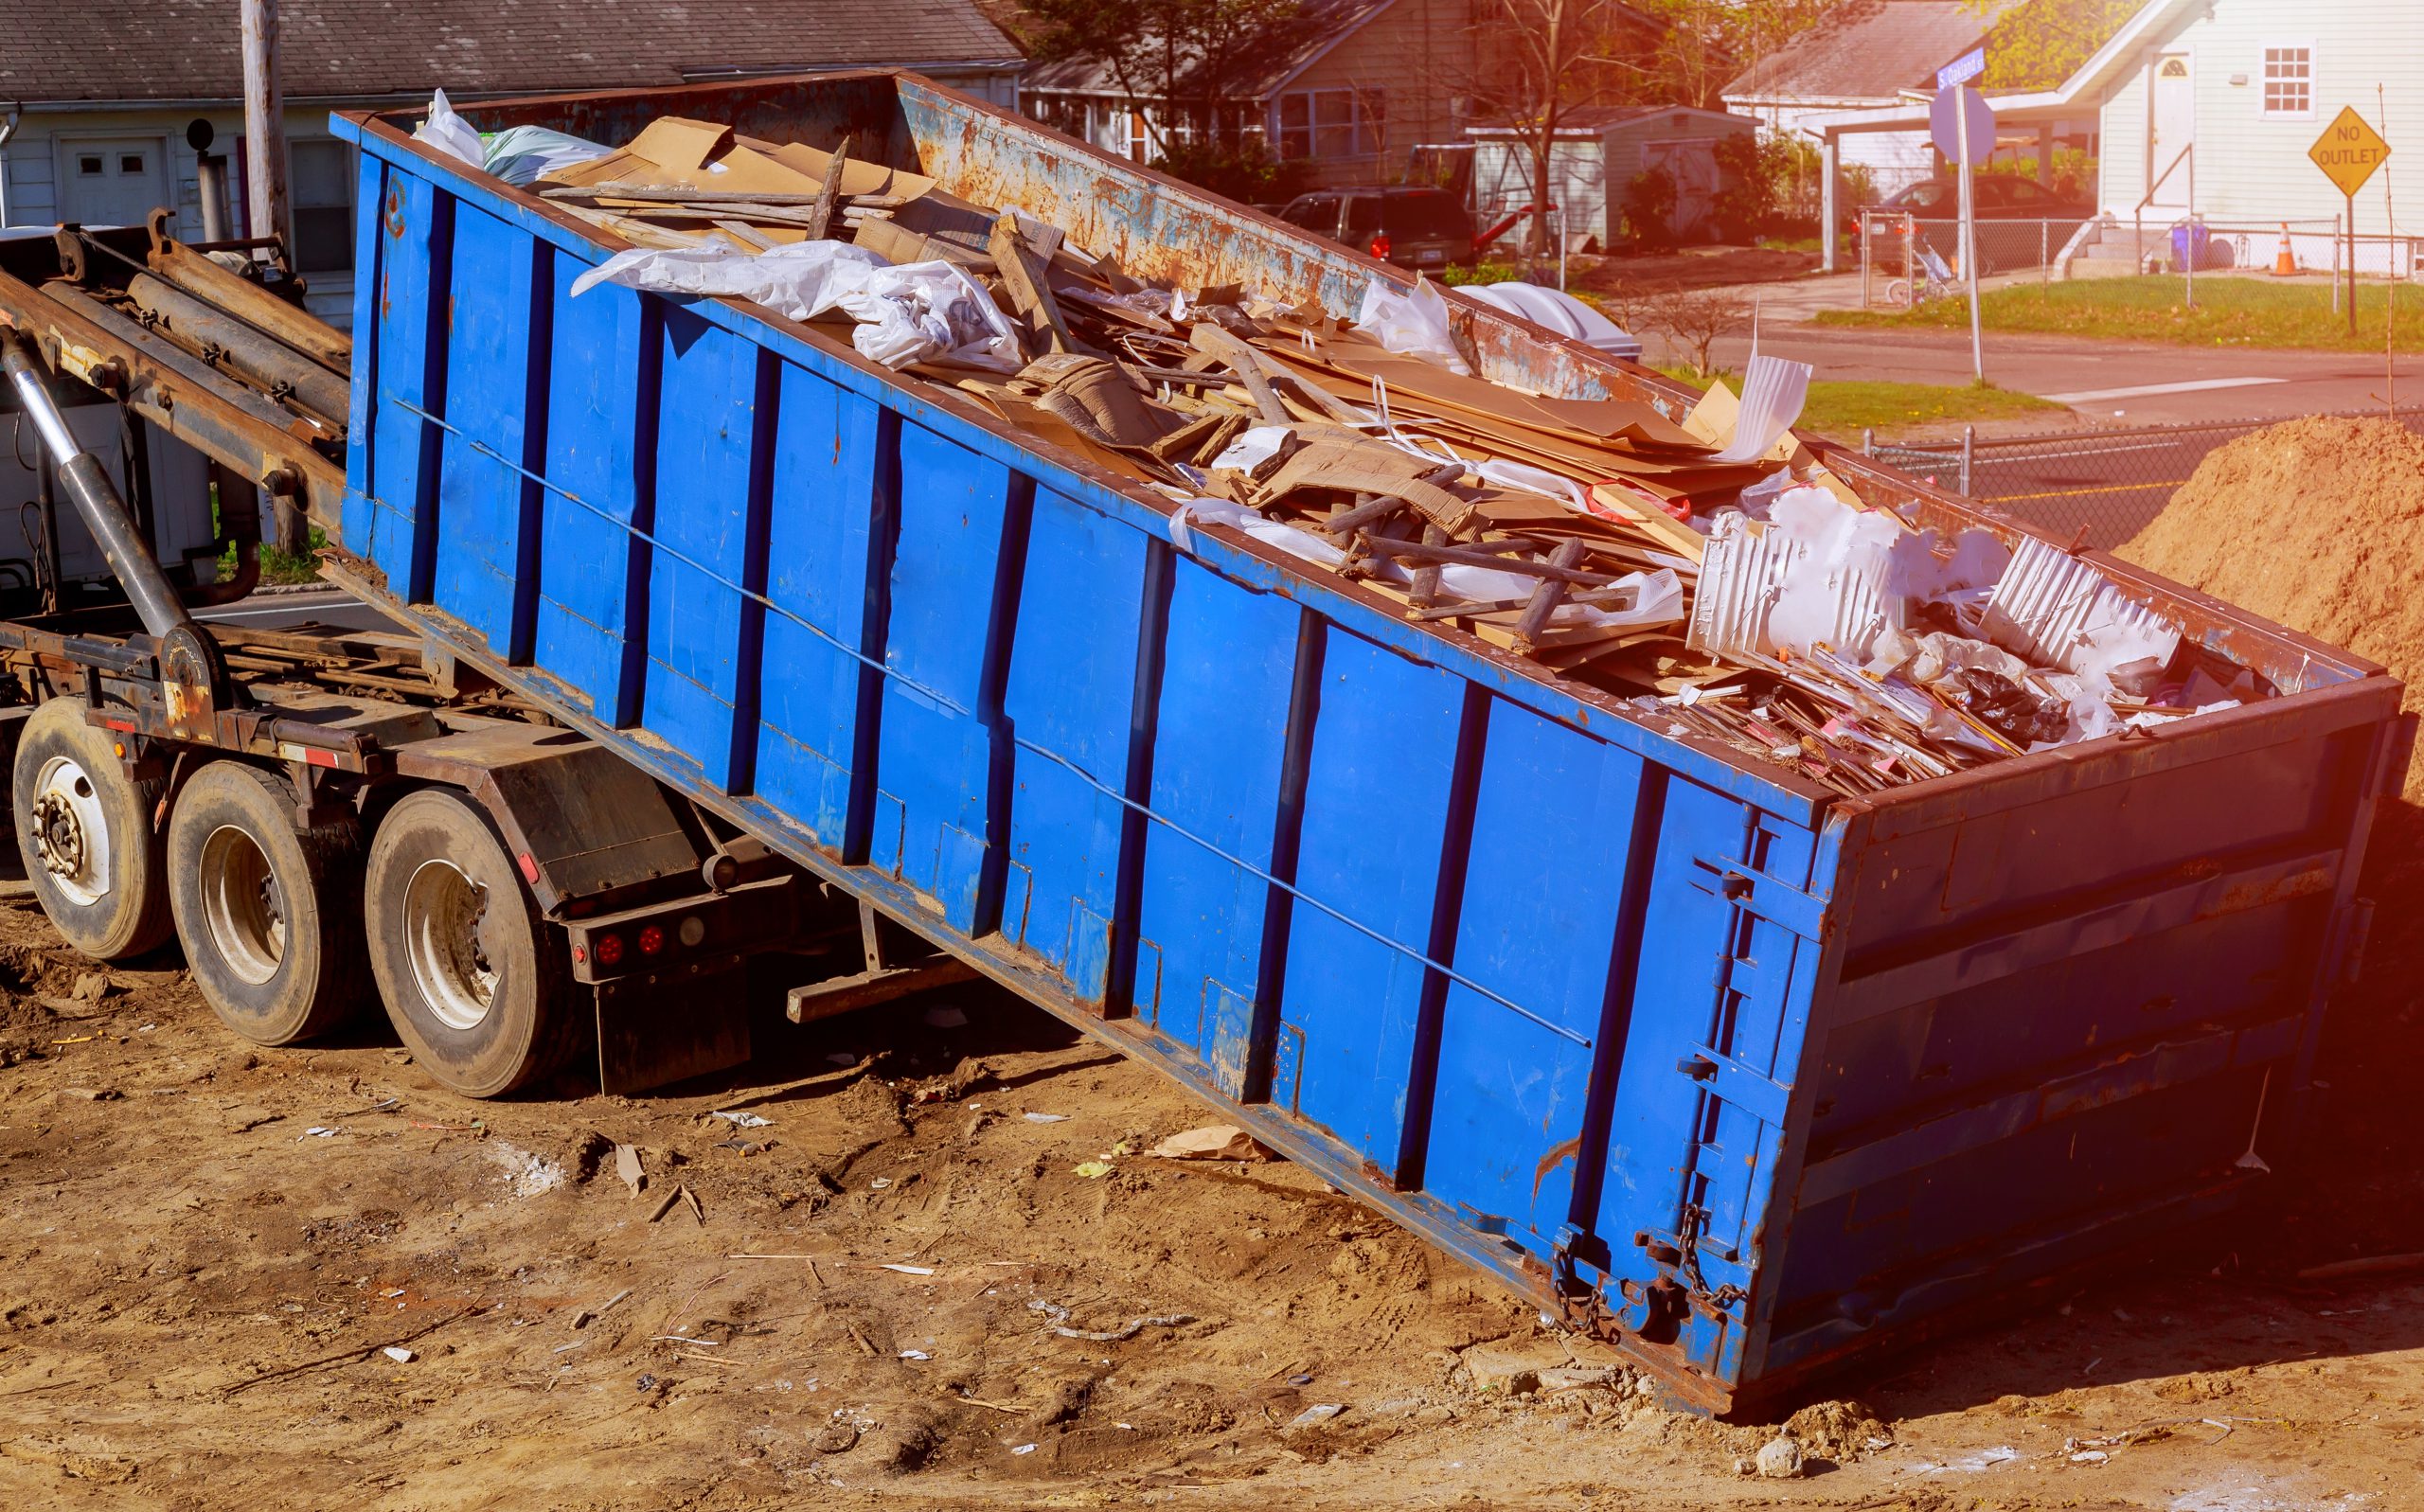 Industrial Garbage Bin Blue Construction Debris Co 2022 11 12 11 02 19 Utc